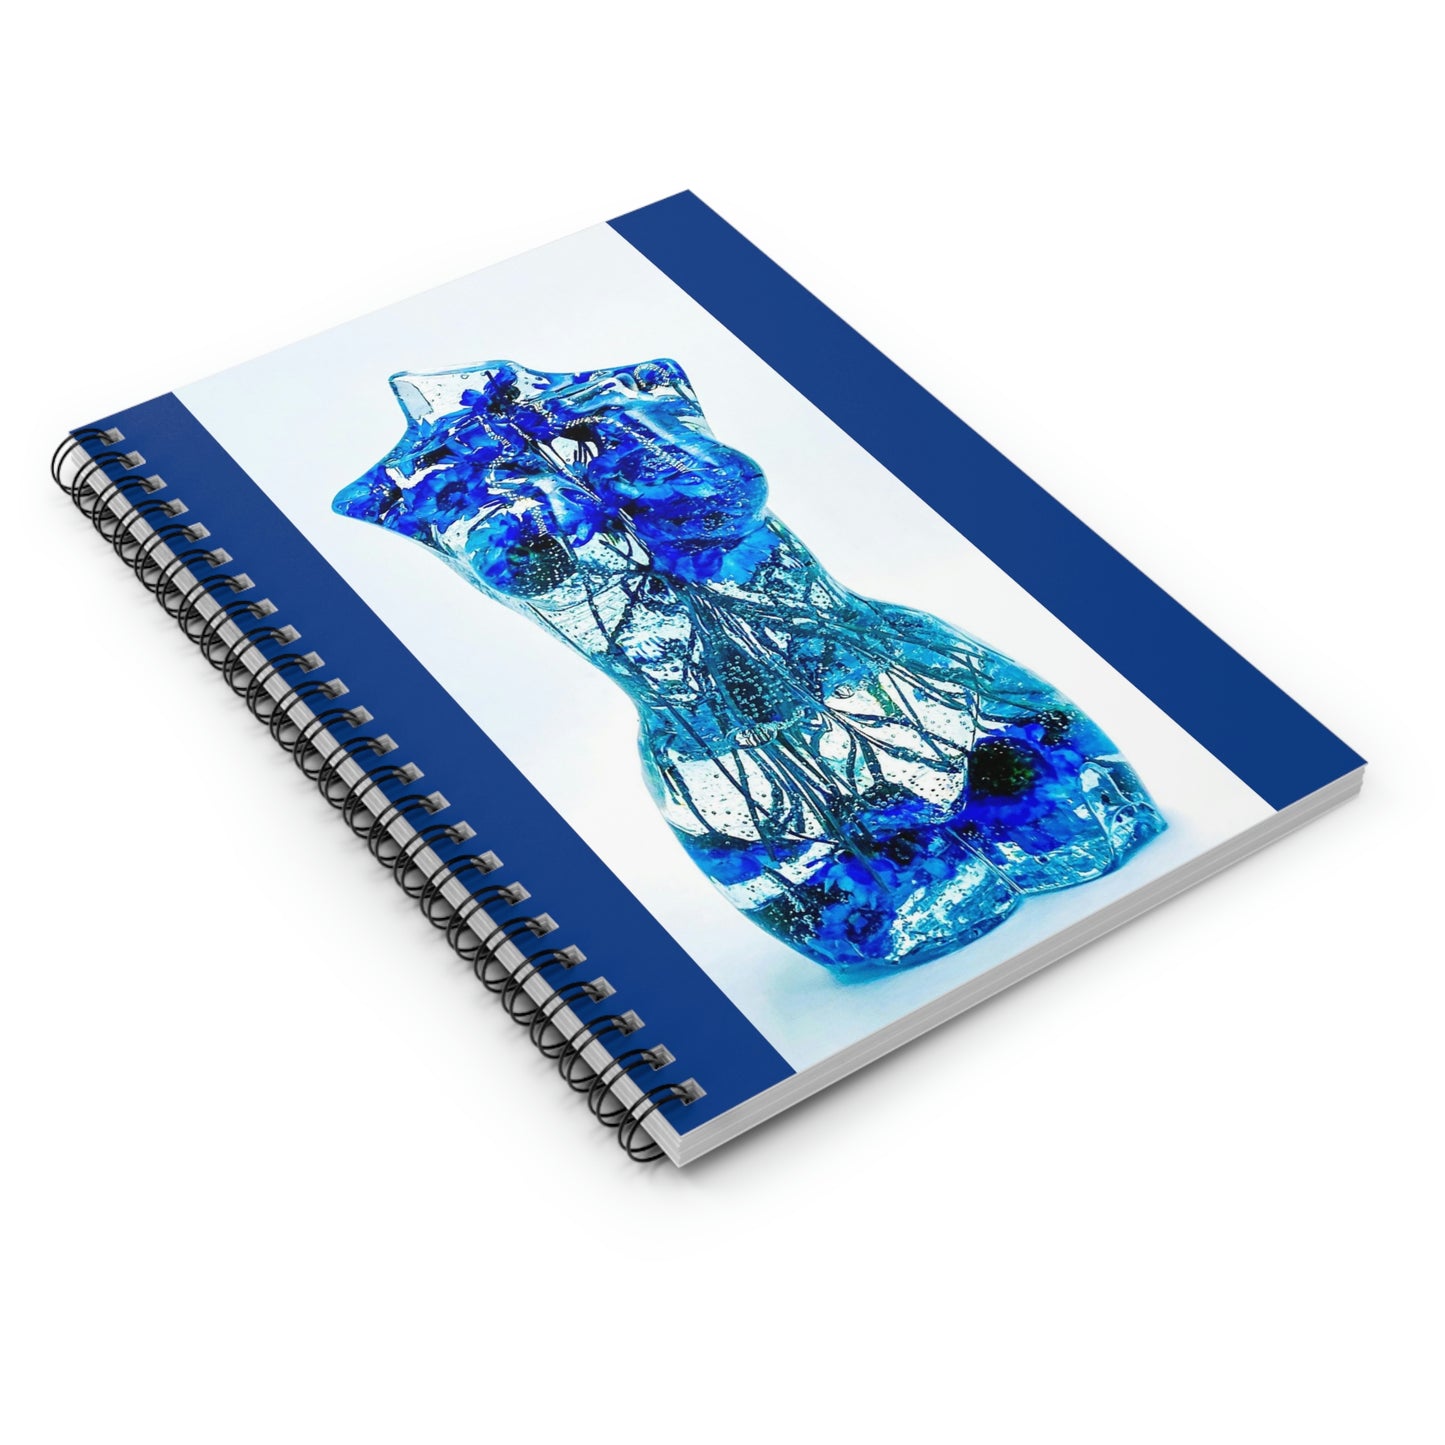 Blue Astro Goddess Spiral Notebook